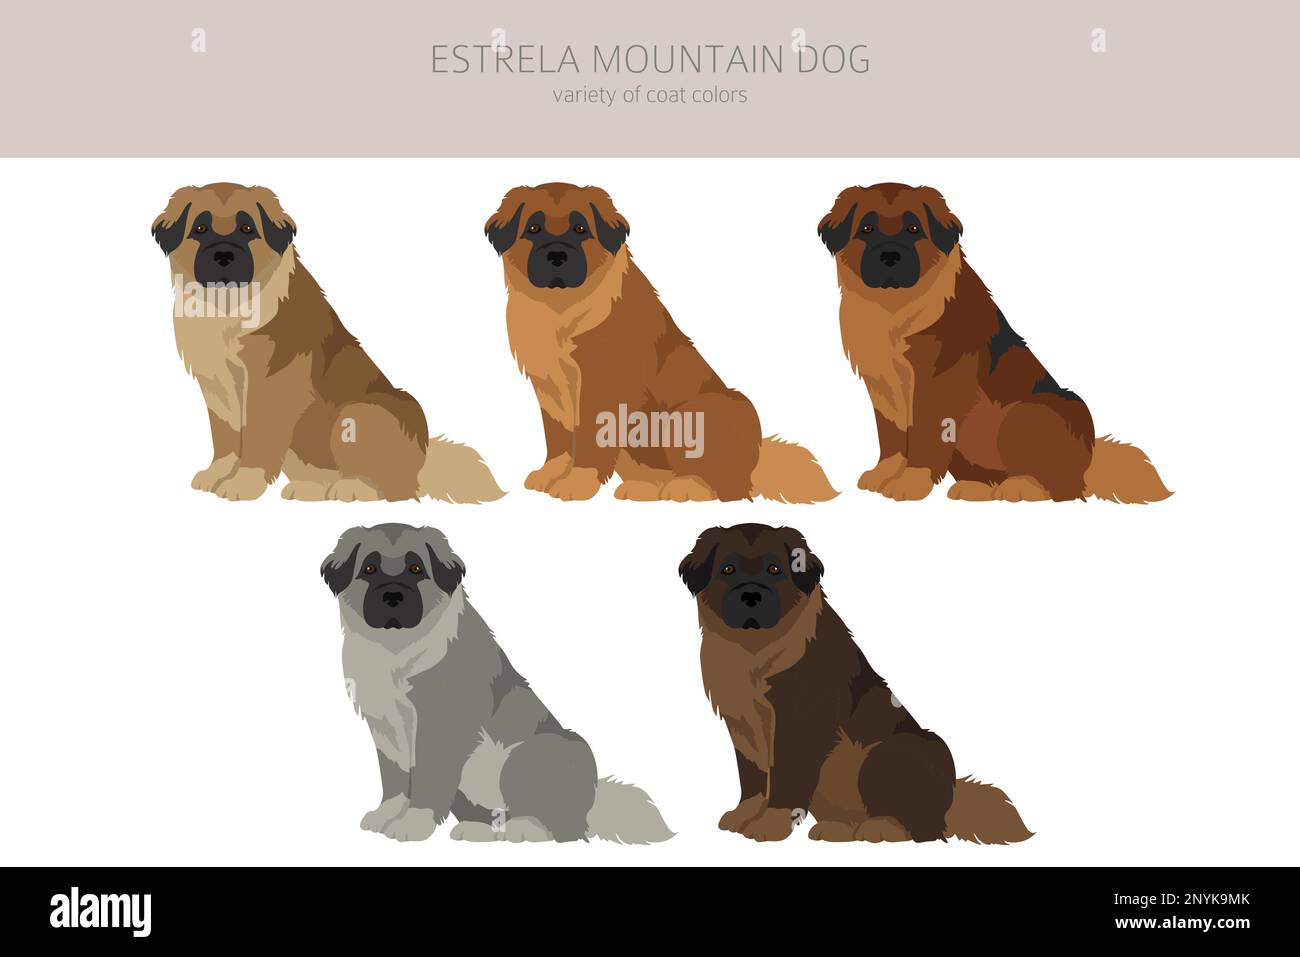 Estrela mountain dog clipart. Different poses, coat colors set.  Vector illustration Stock Vector